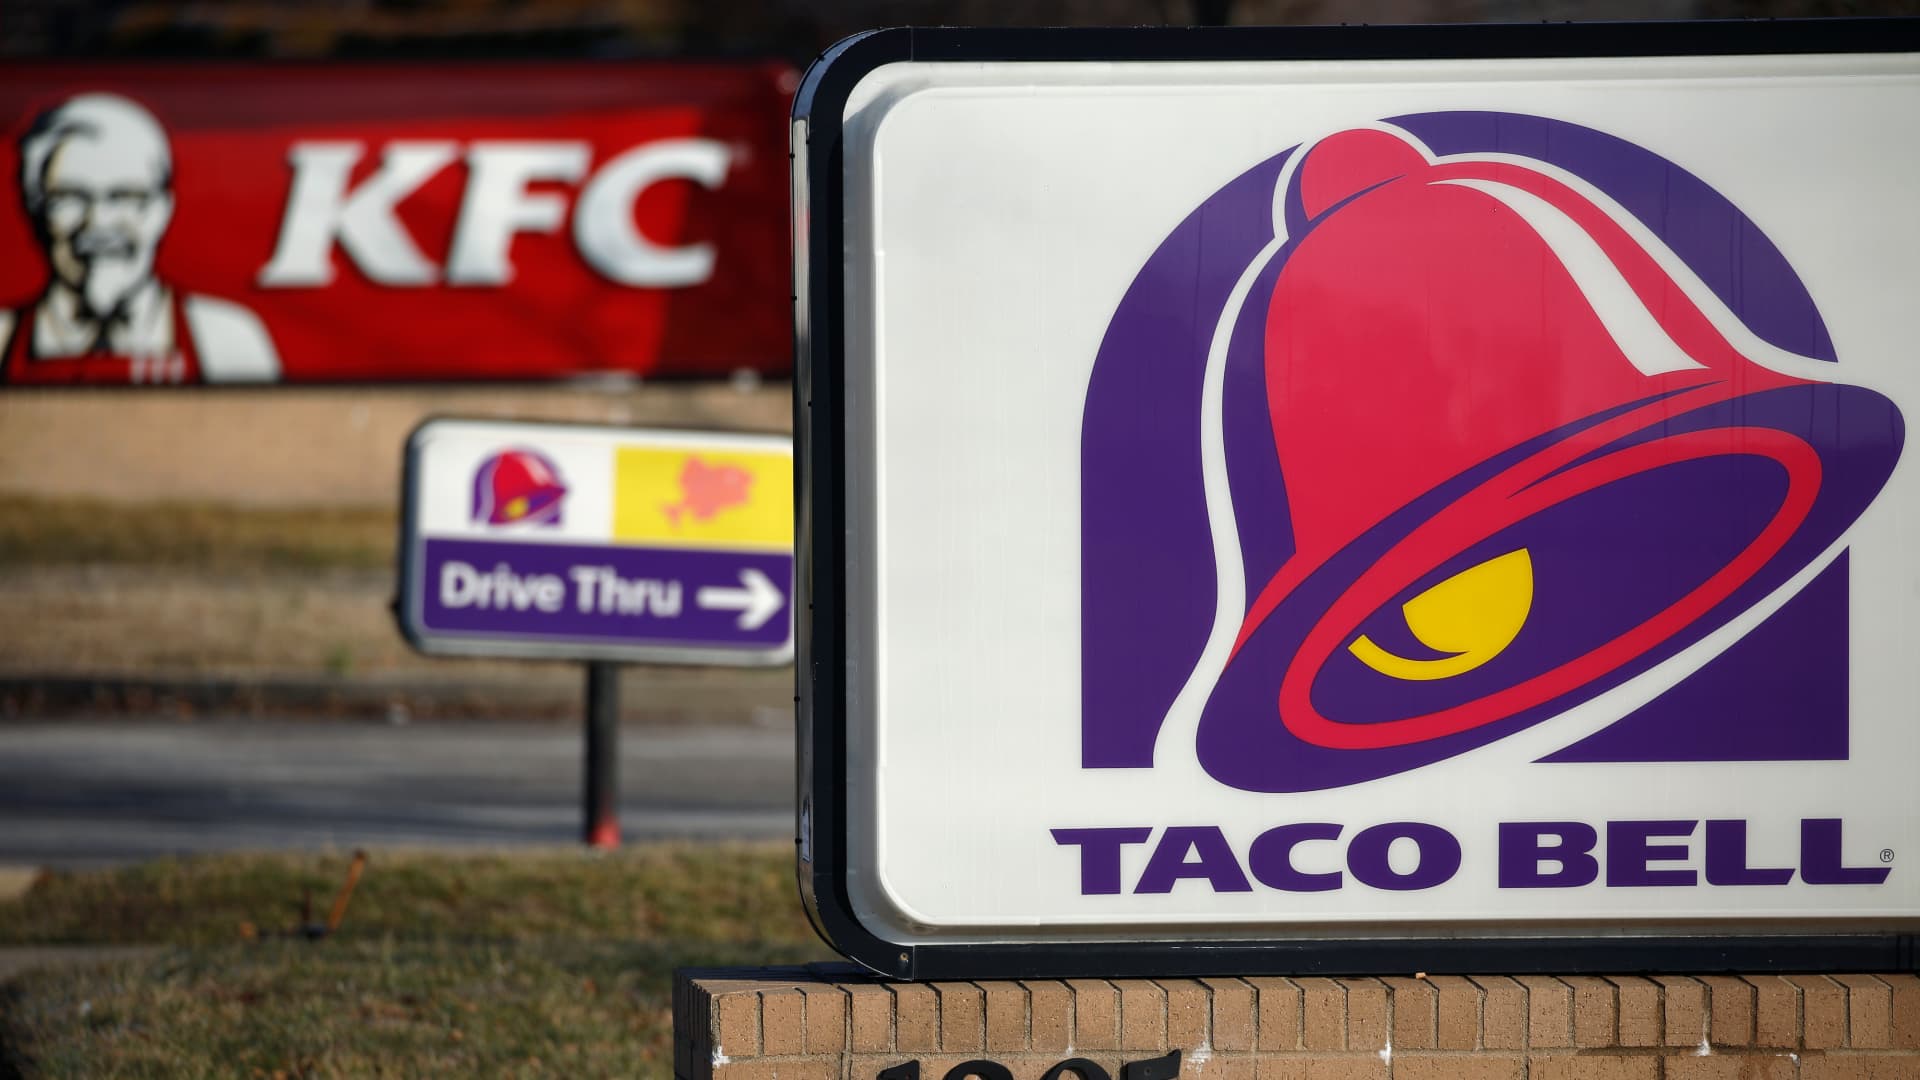 Taco Bell owner Yum Brands misses revenue estimates despite soaring KFC sales